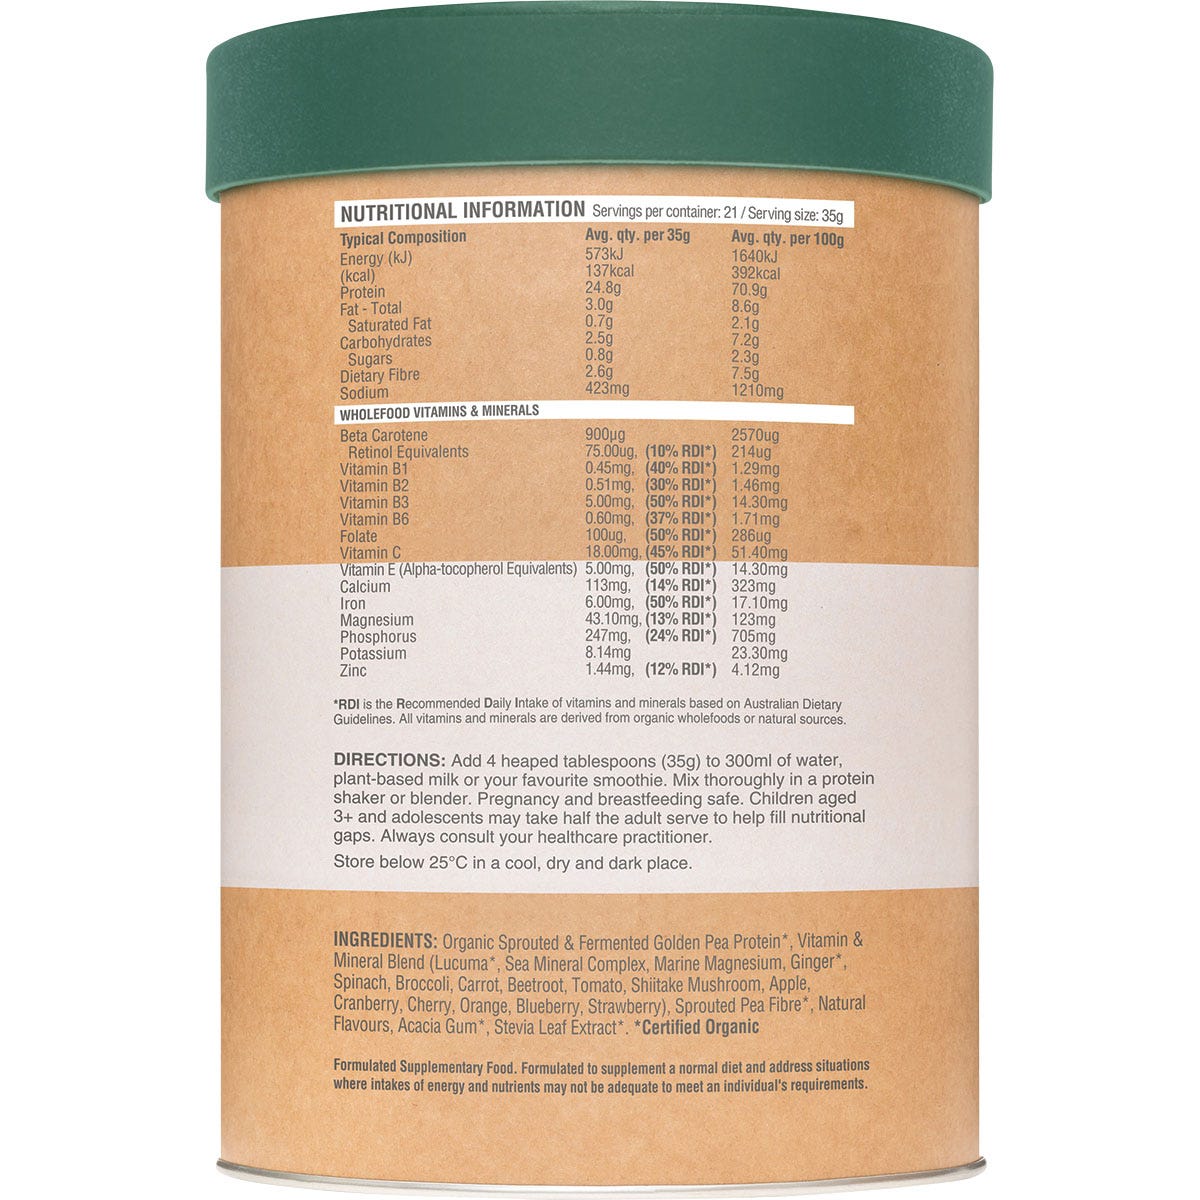 Amazonia Raw Protein Daily Nourish Vanilla 750g - Dr Earth - Nutrition